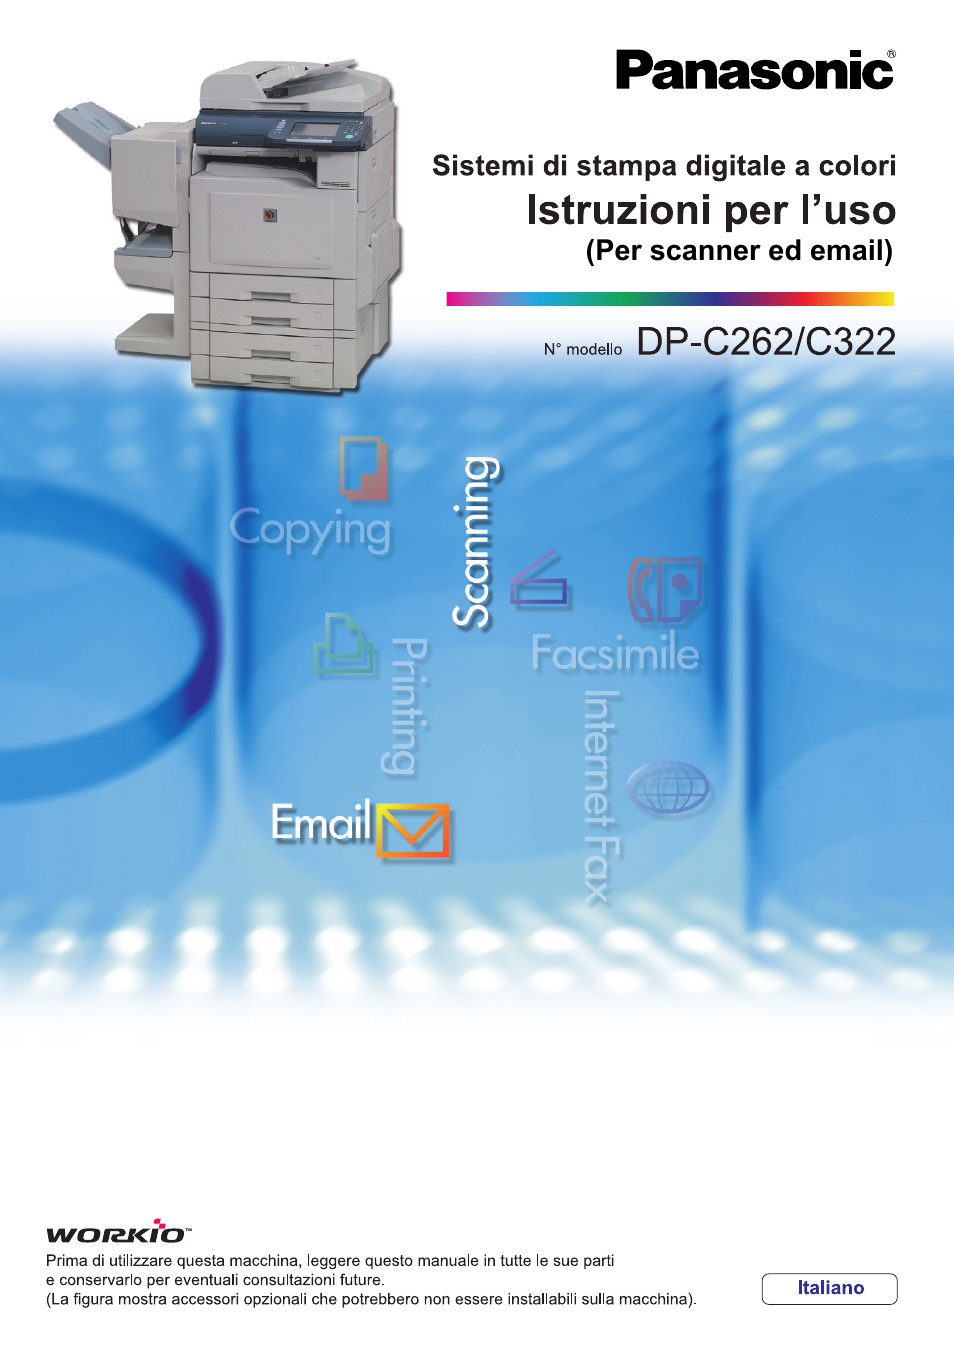 Panasonic DPC262 Manuale d'uso | Pagine: 50